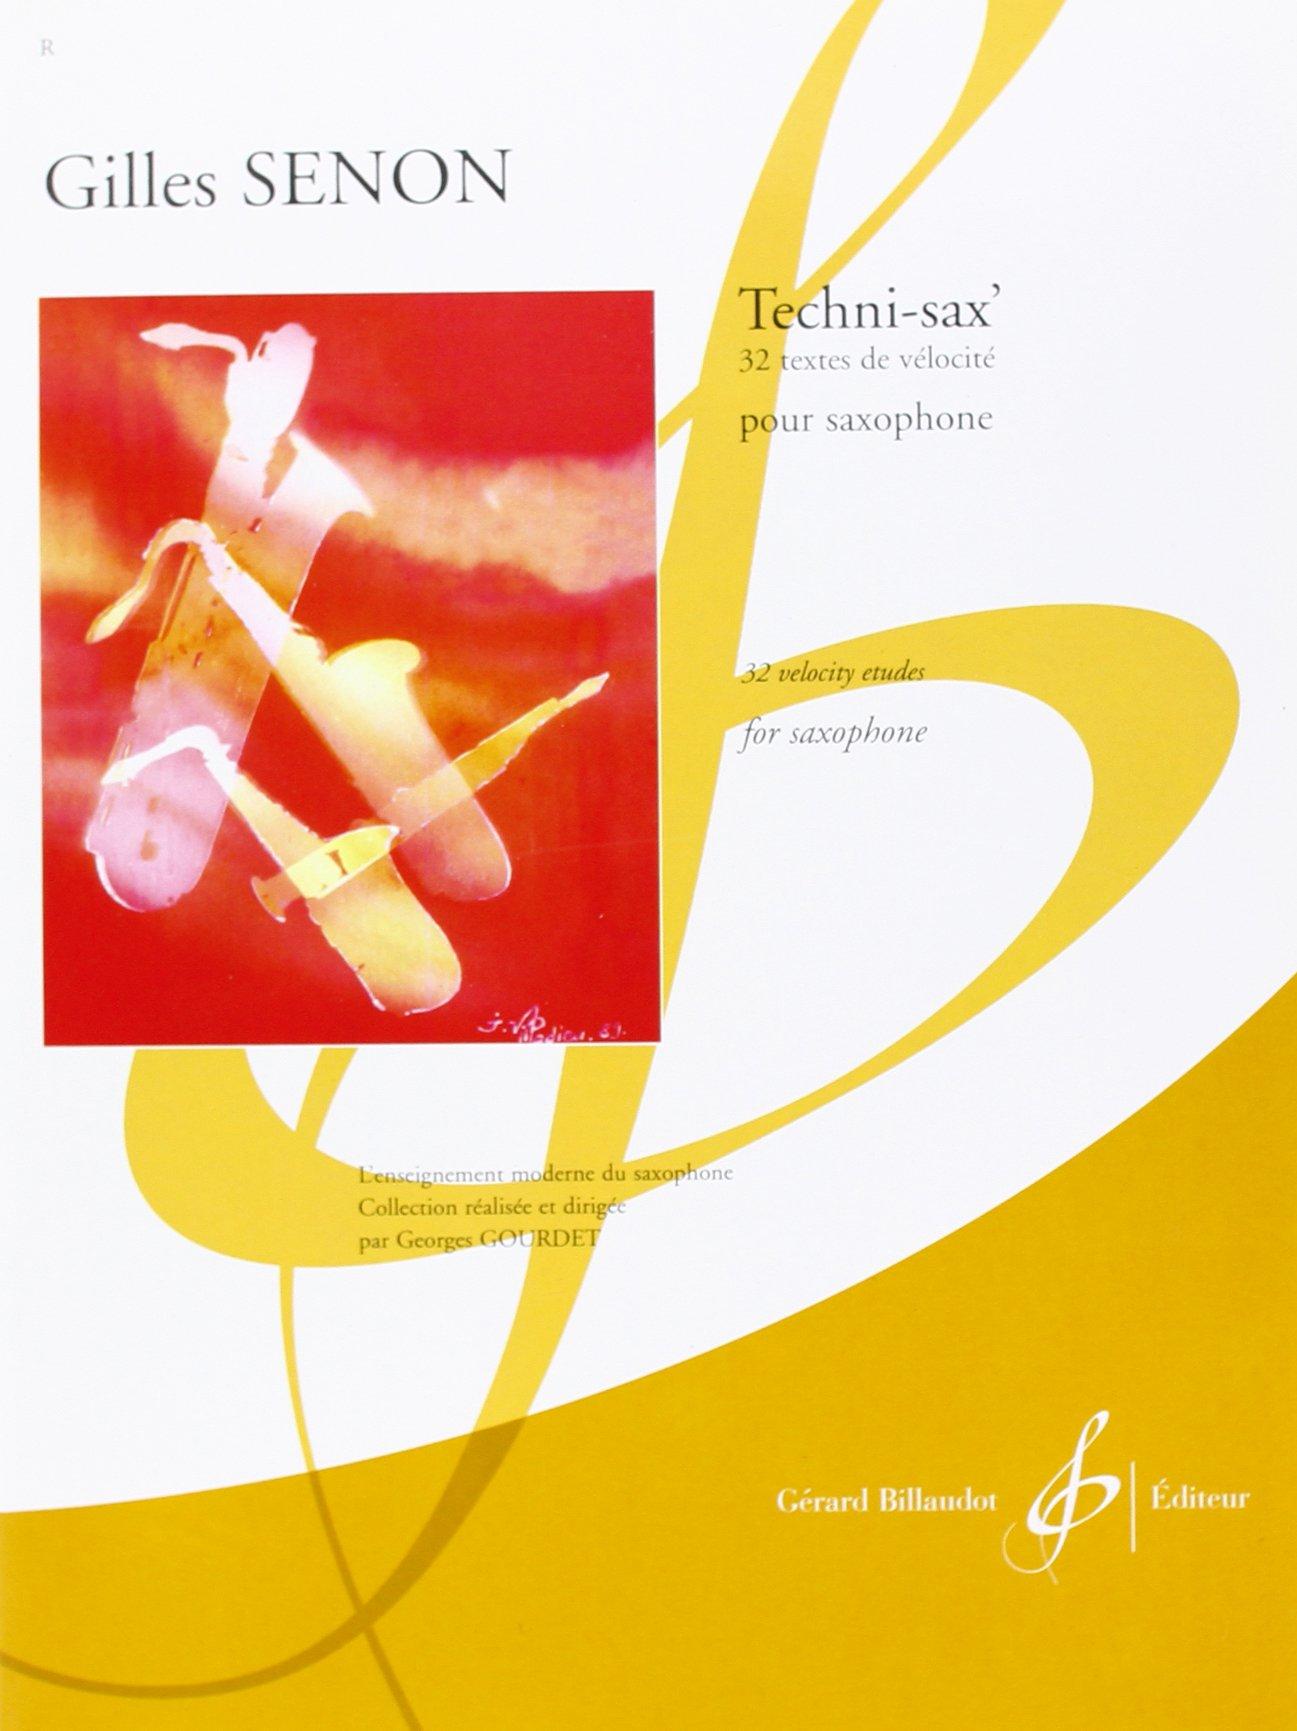 Gilles Senon - Techni-sax - 32 textes de velocite pour saxophone